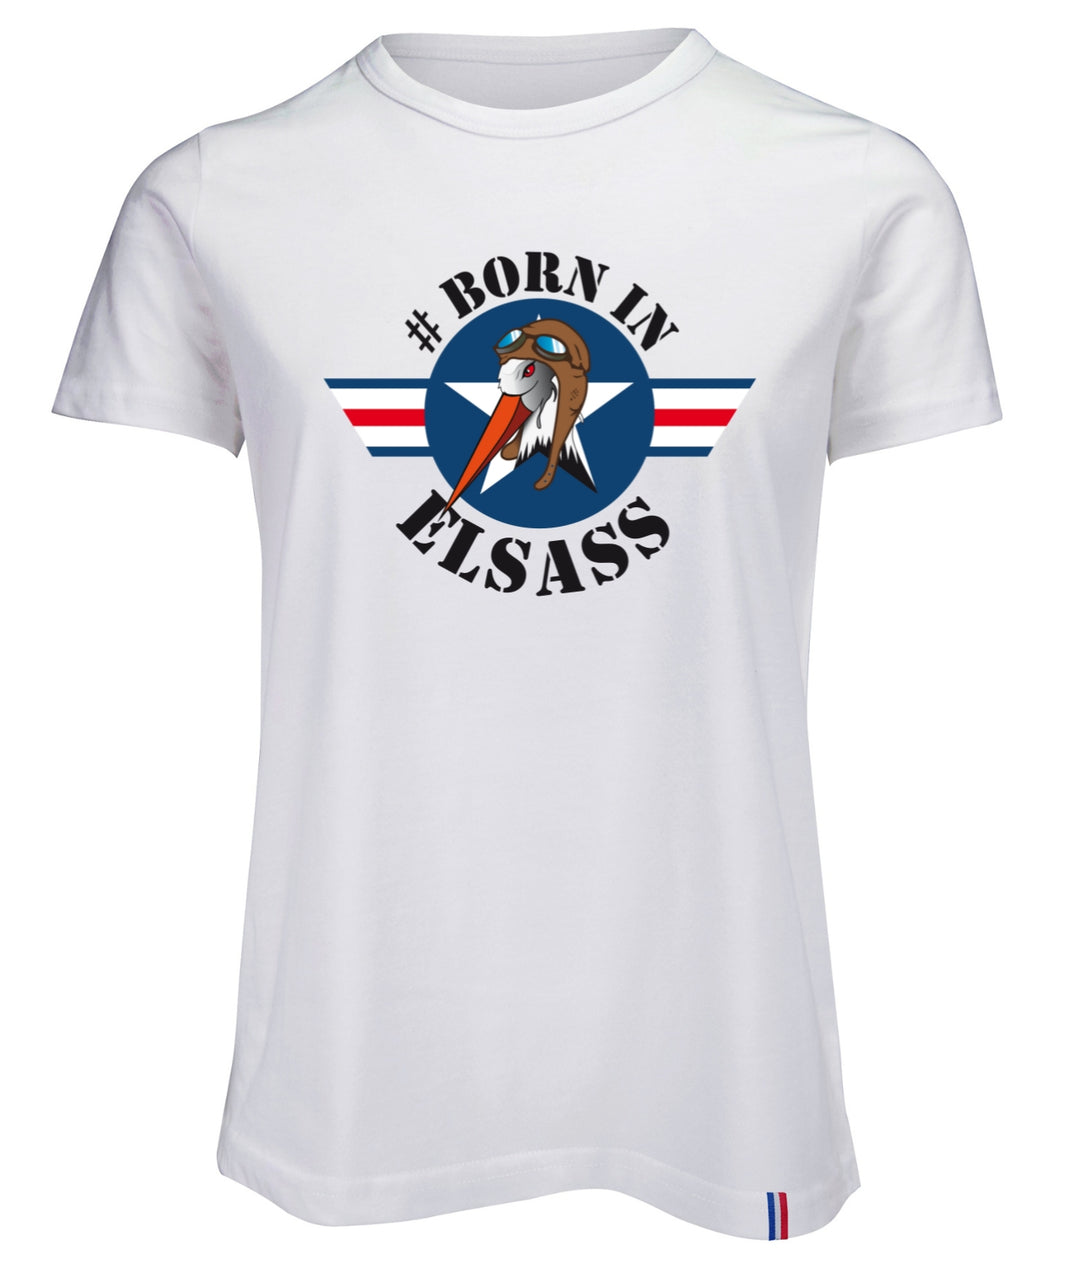 T-Shirt Elsass Army Femme - 100% Made in France de Born In Elsass